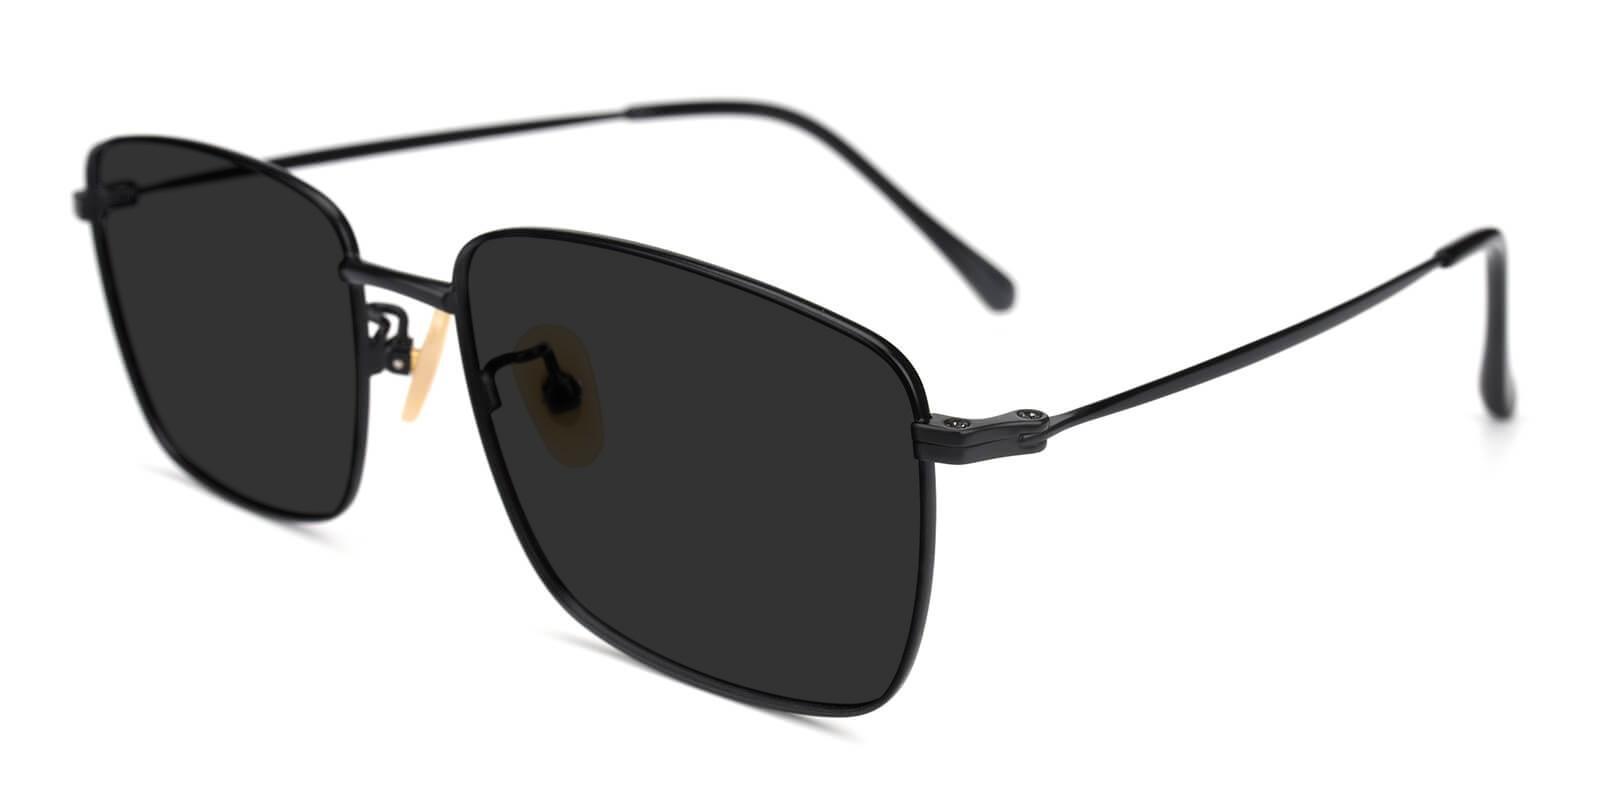 Synapse Black Titanium Lightweight , NosePads , Sunglasses Frames from ABBE Glasses